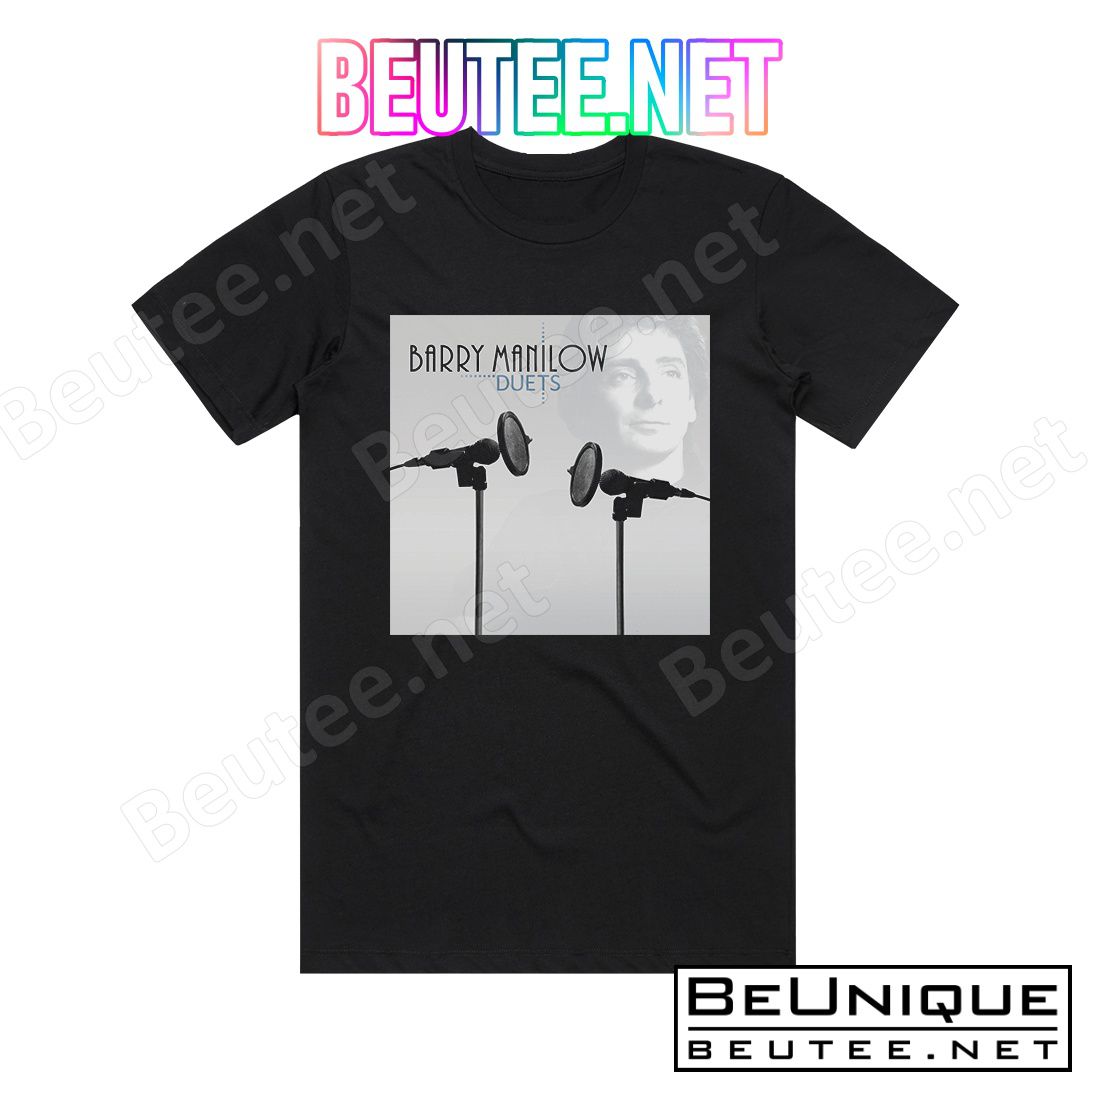 Barry Manilow Duets Album Cover T-Shirt